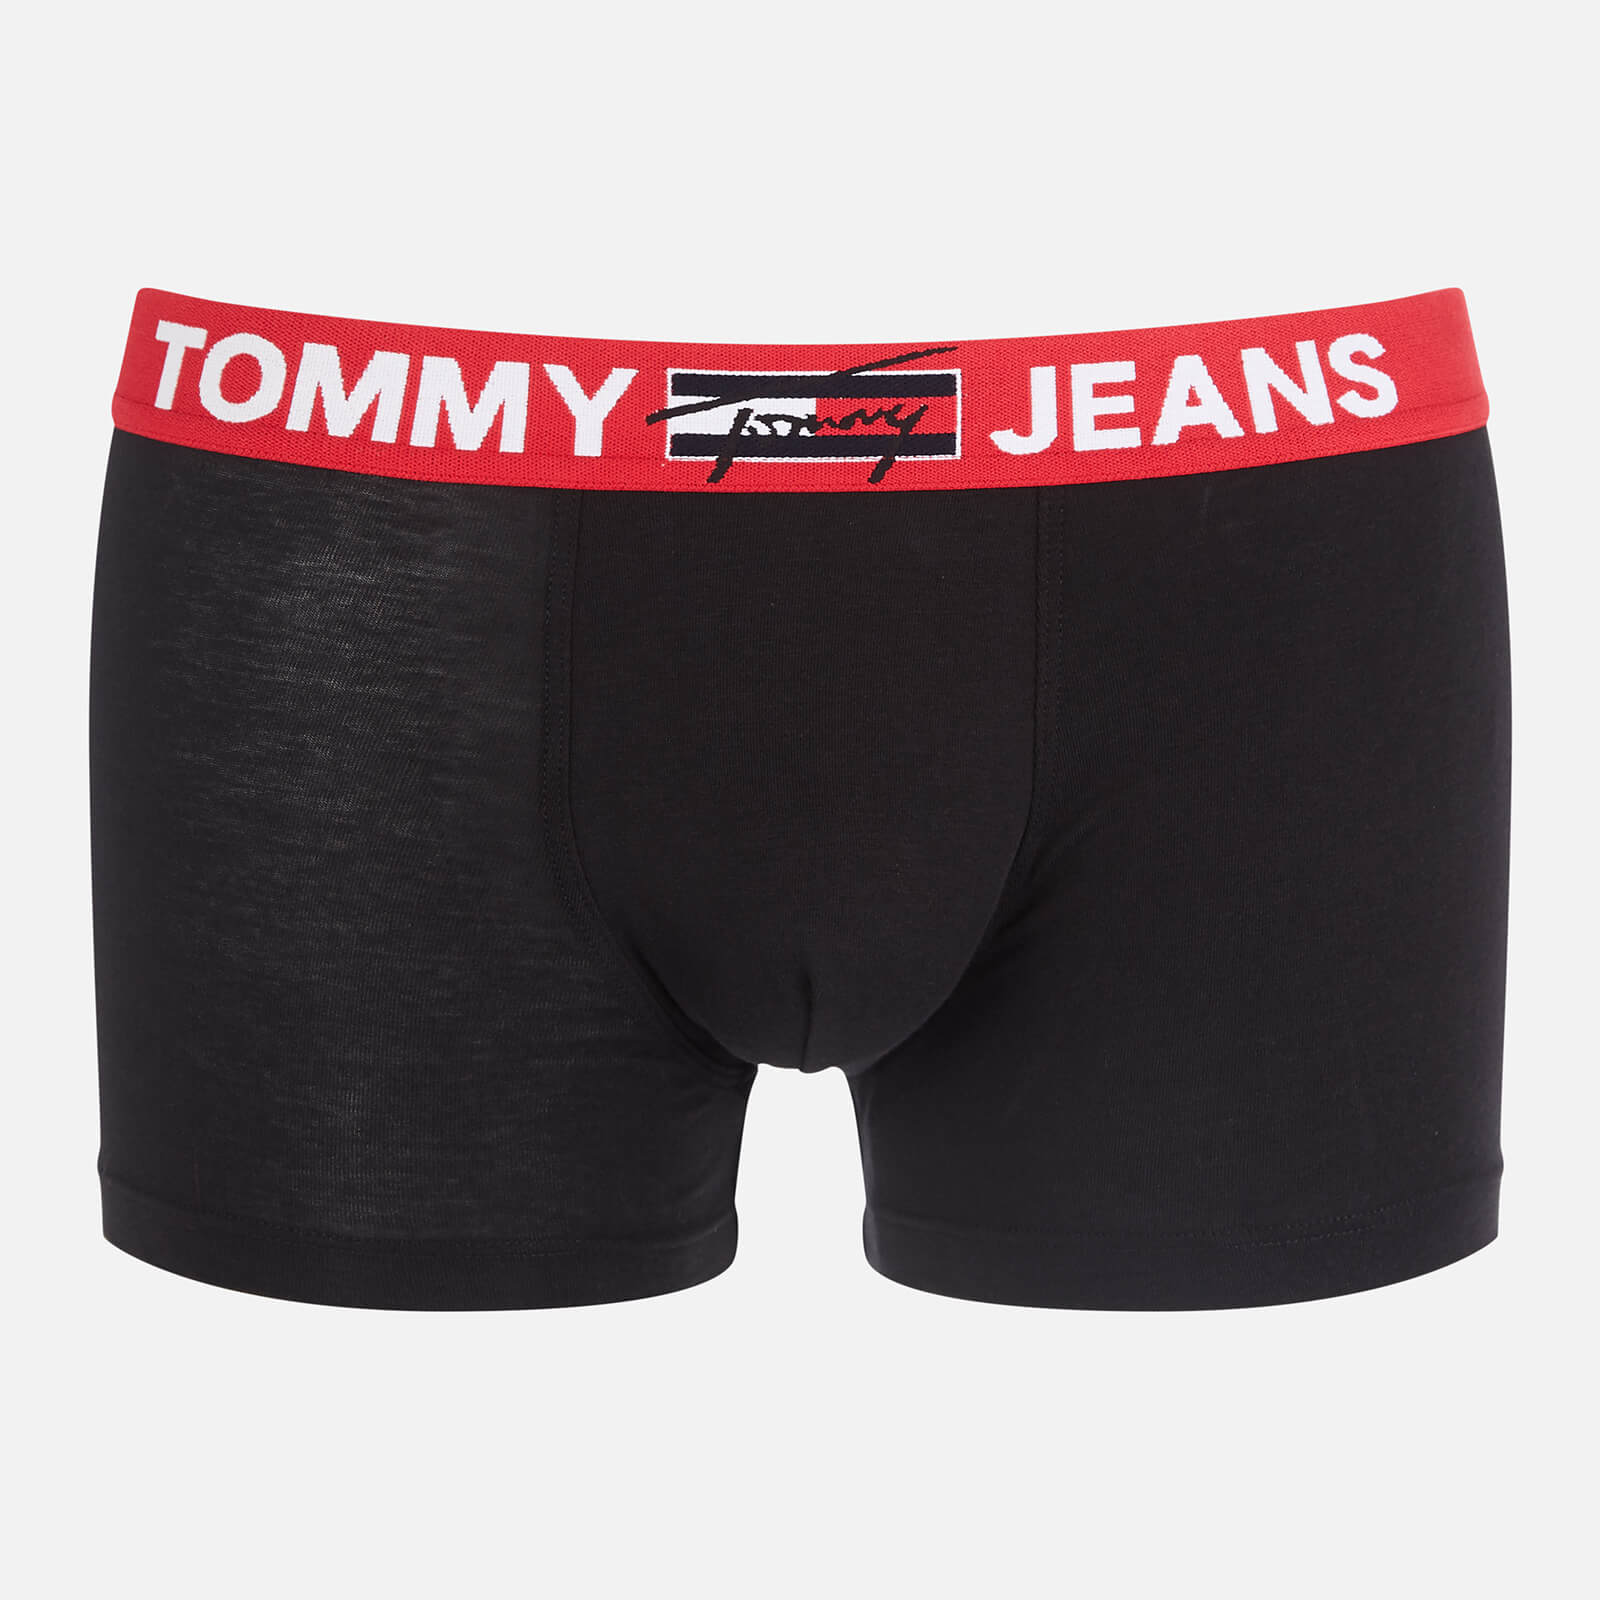 Tommy Jeans Men's Trunks - Black - S